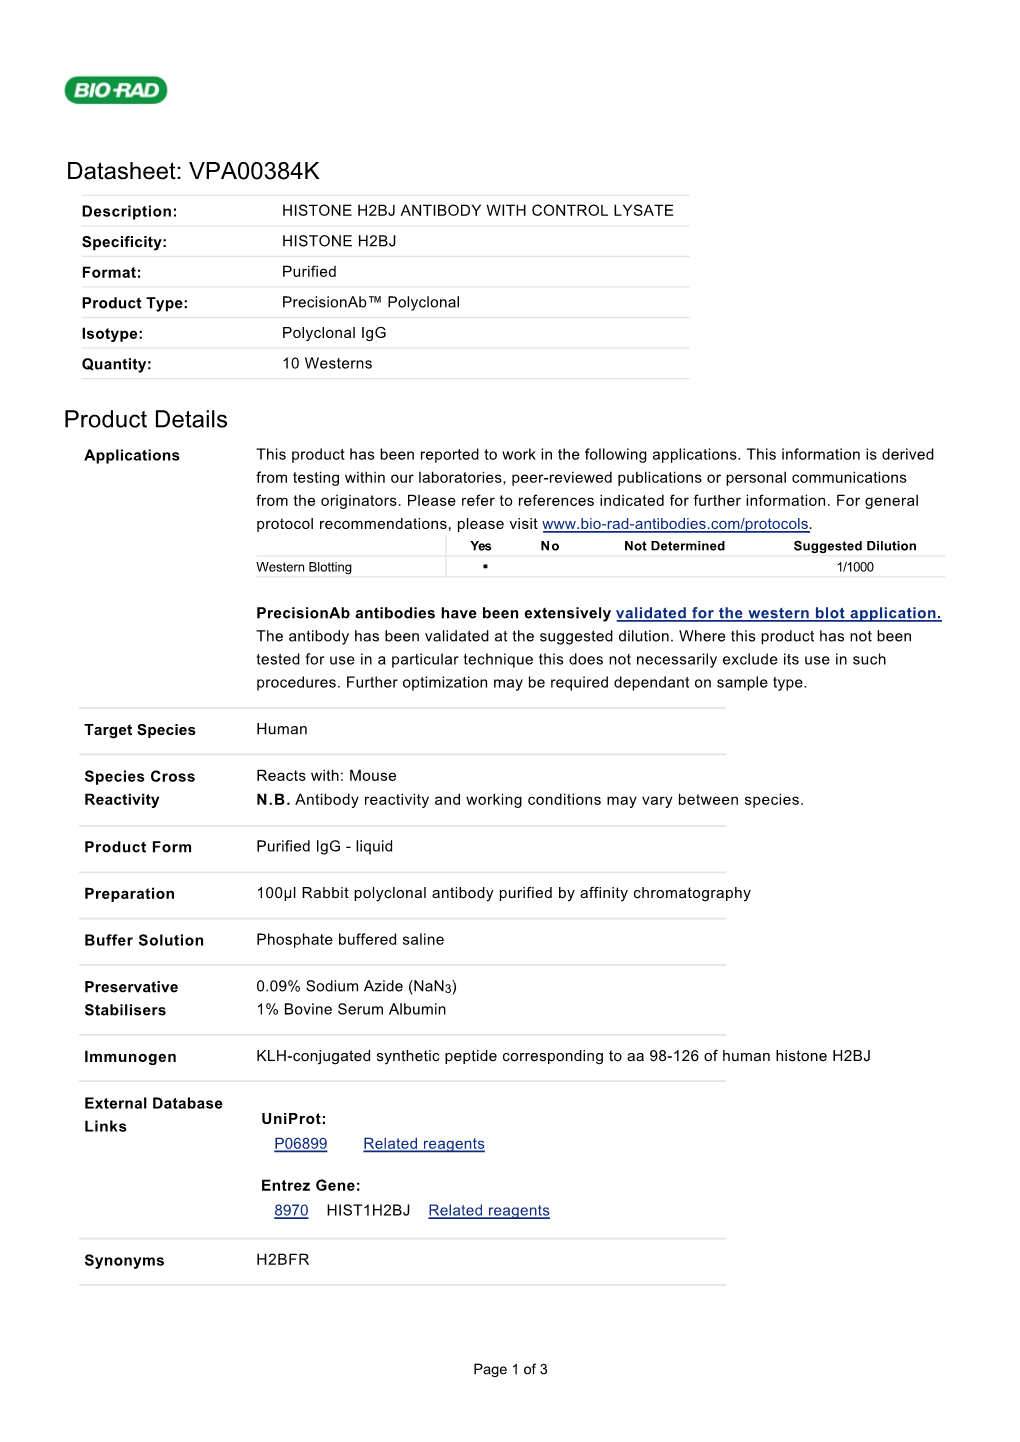 Datasheet: VPA00384K Product Details